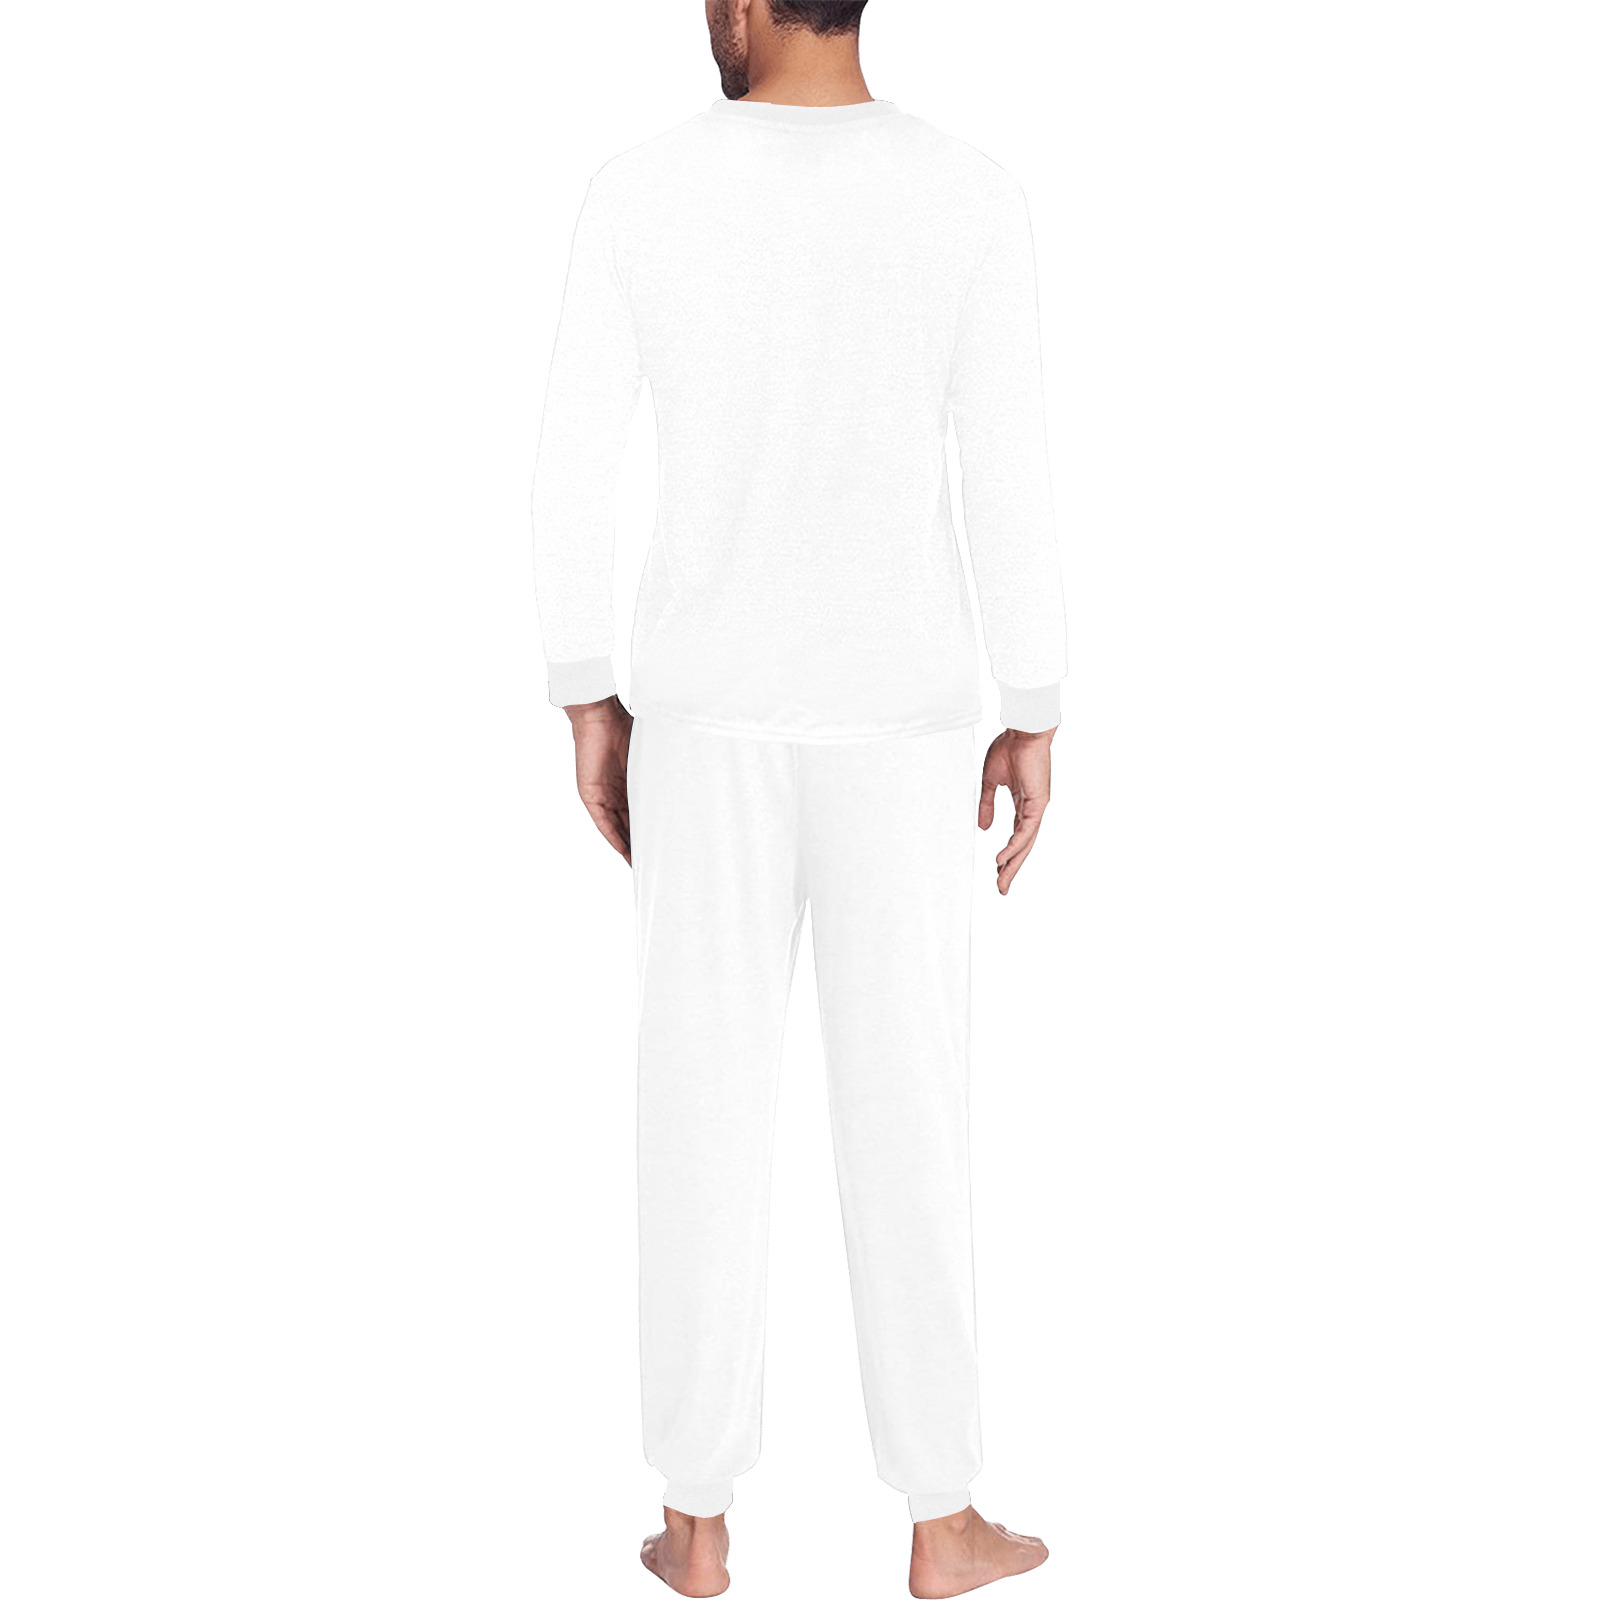 WHITE Men's All Over Print Pajama Set with Custom Cuff